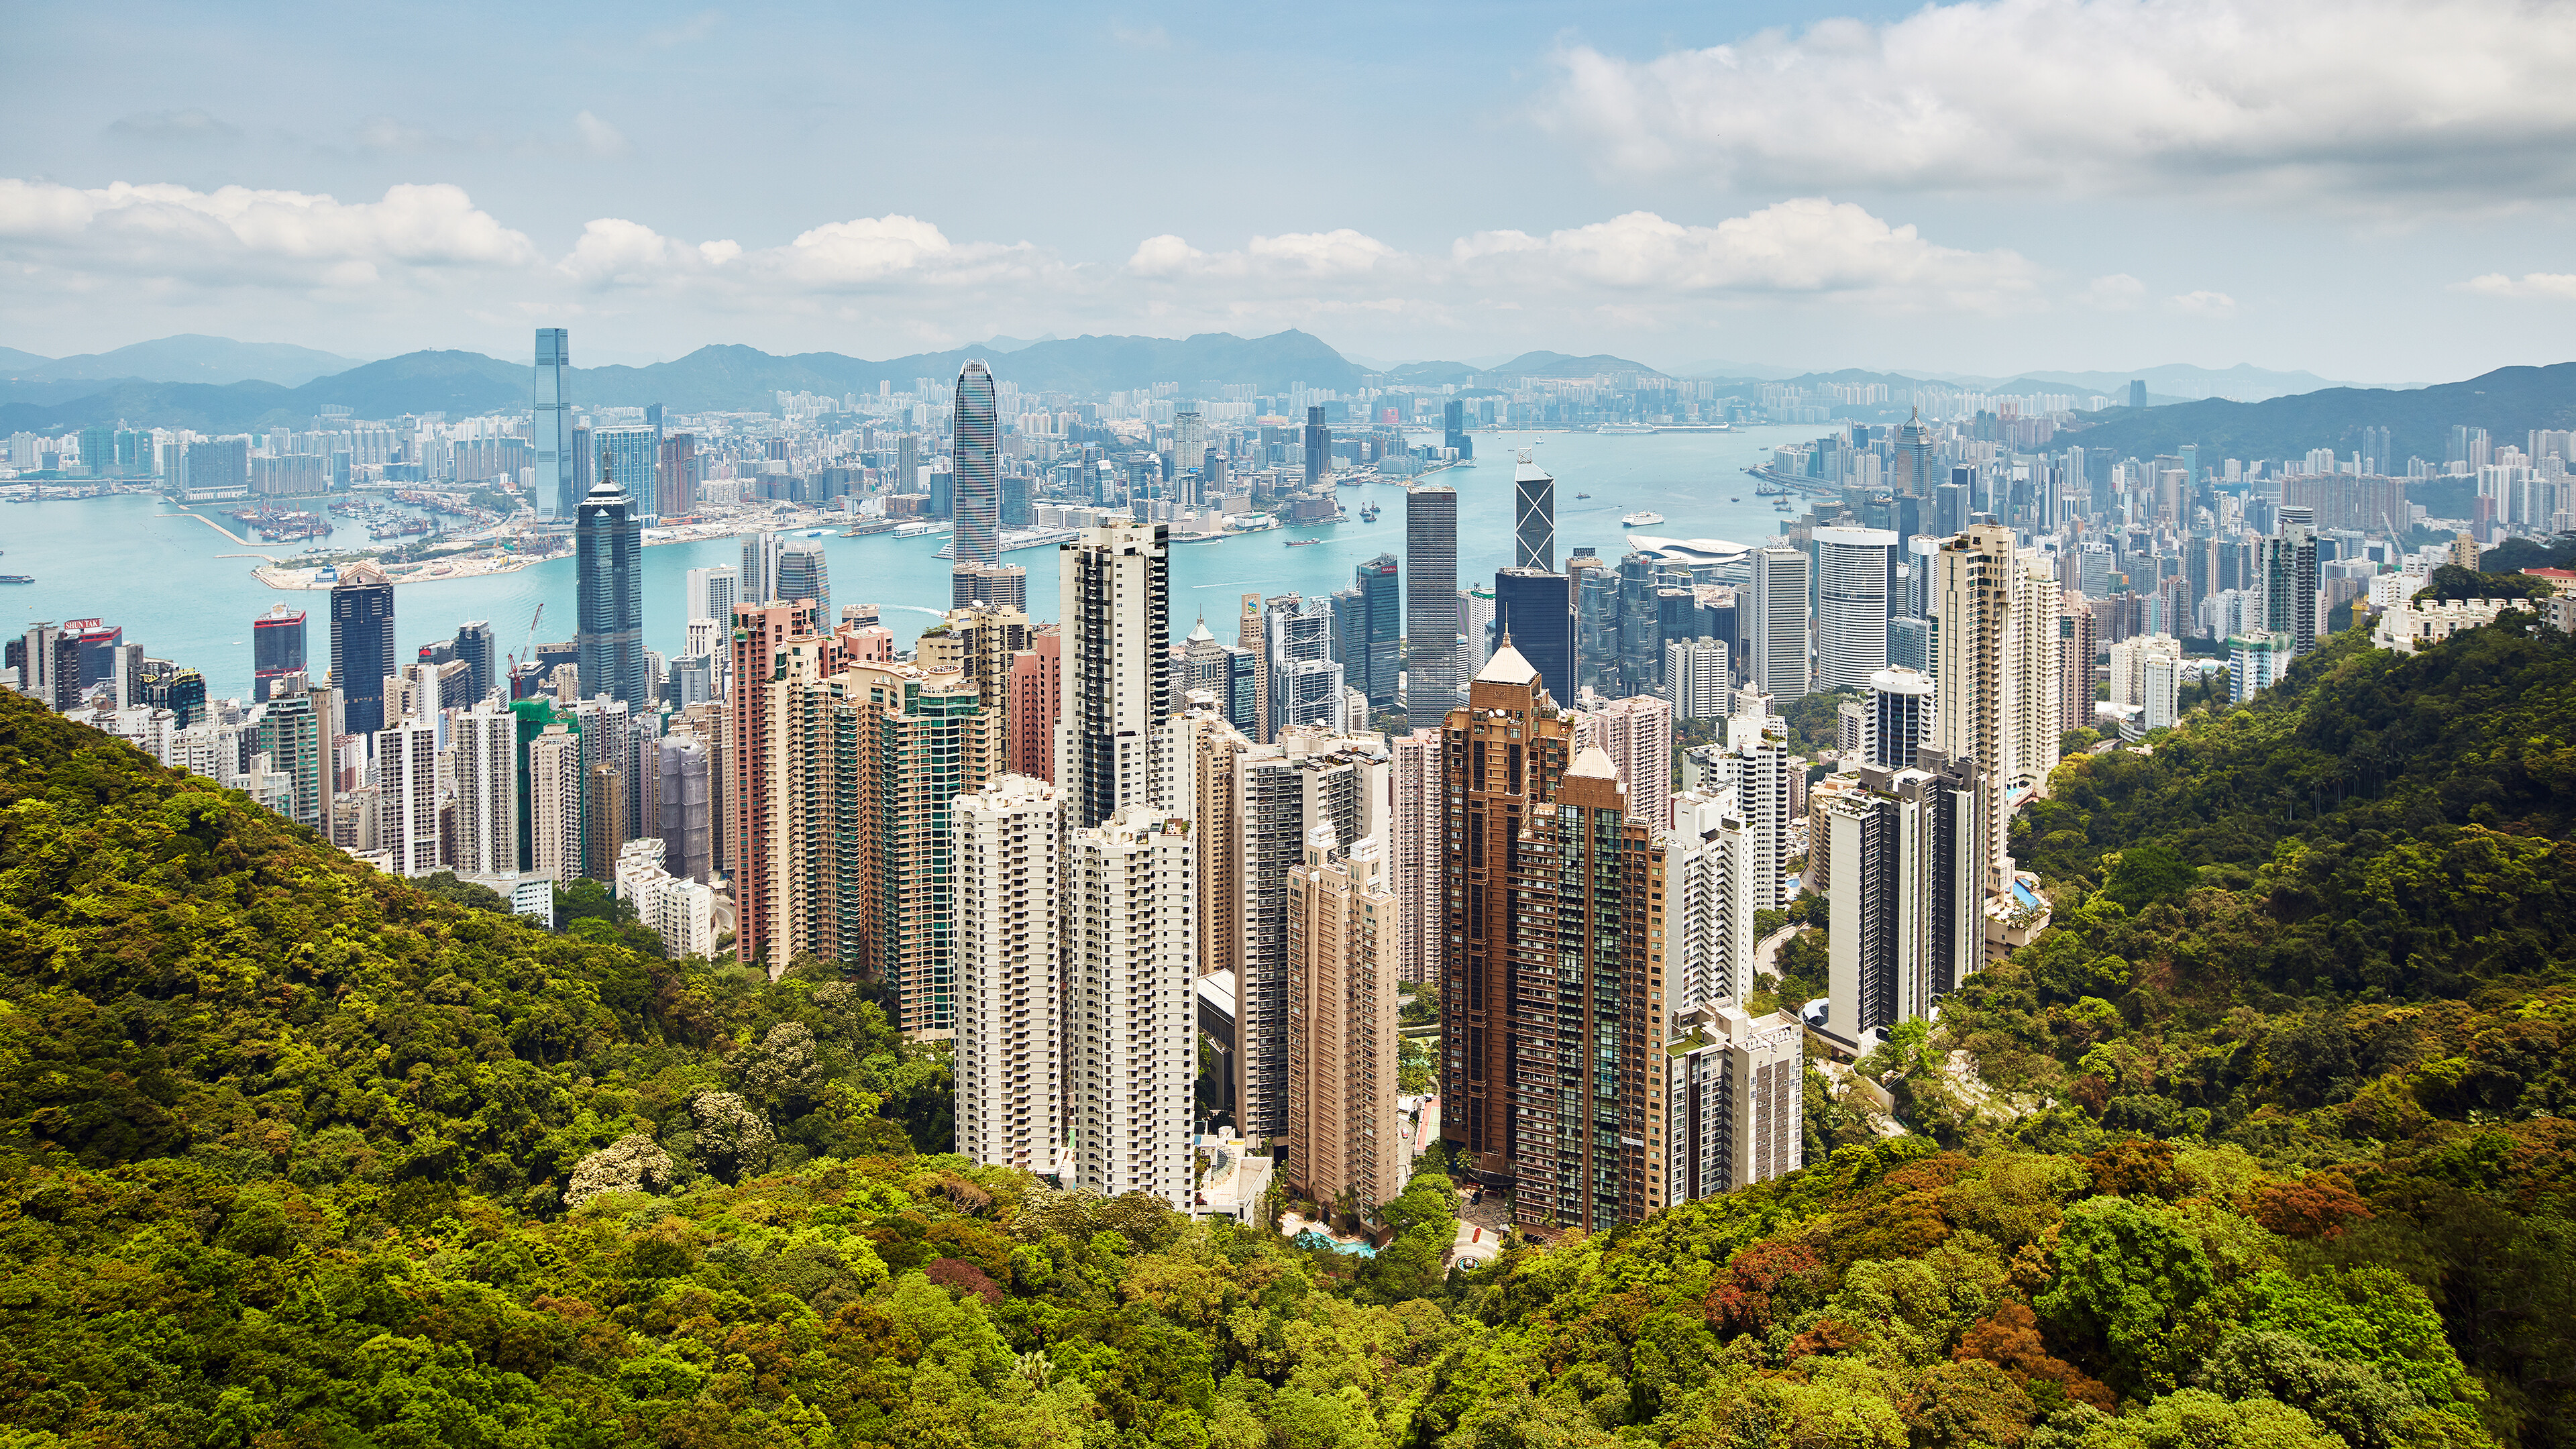 Hong Kong: Mount Austin, Viewpoint, Skyscrapers. 3840x2160 4K Wallpaper.